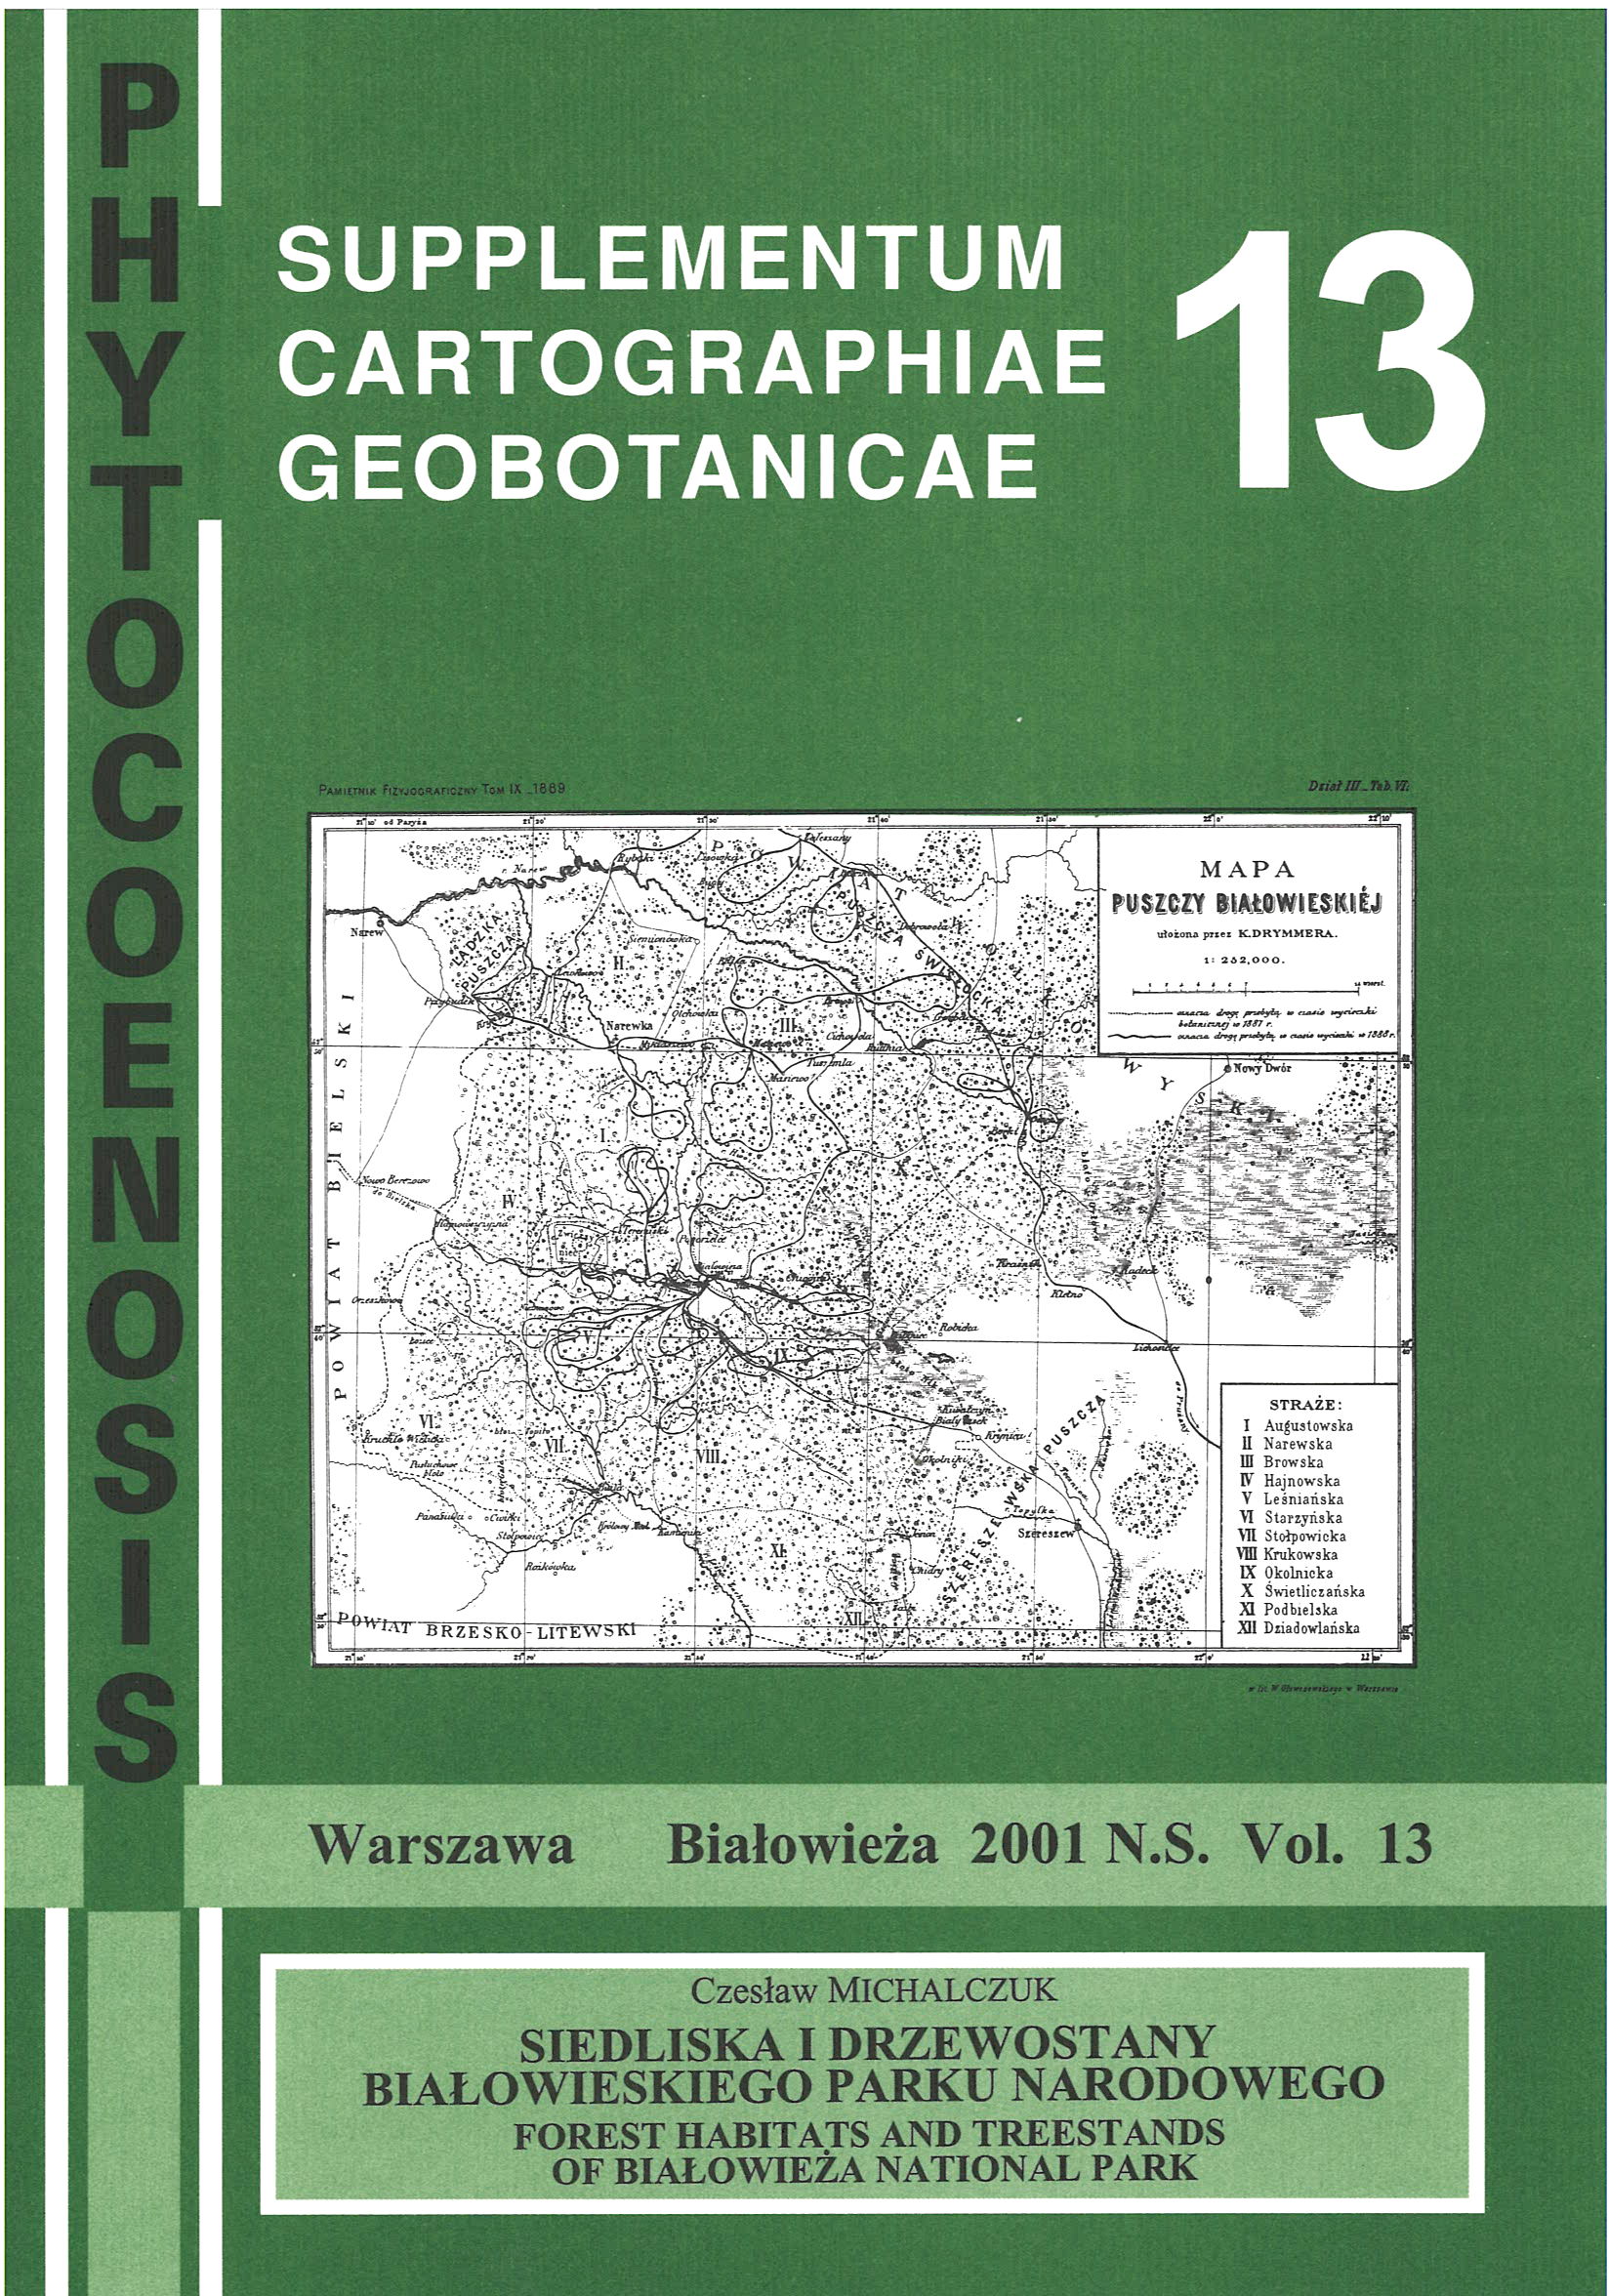 Phytocoenosis (N.S.) 13, Supplementum Cartographiae Geobotanicae 13